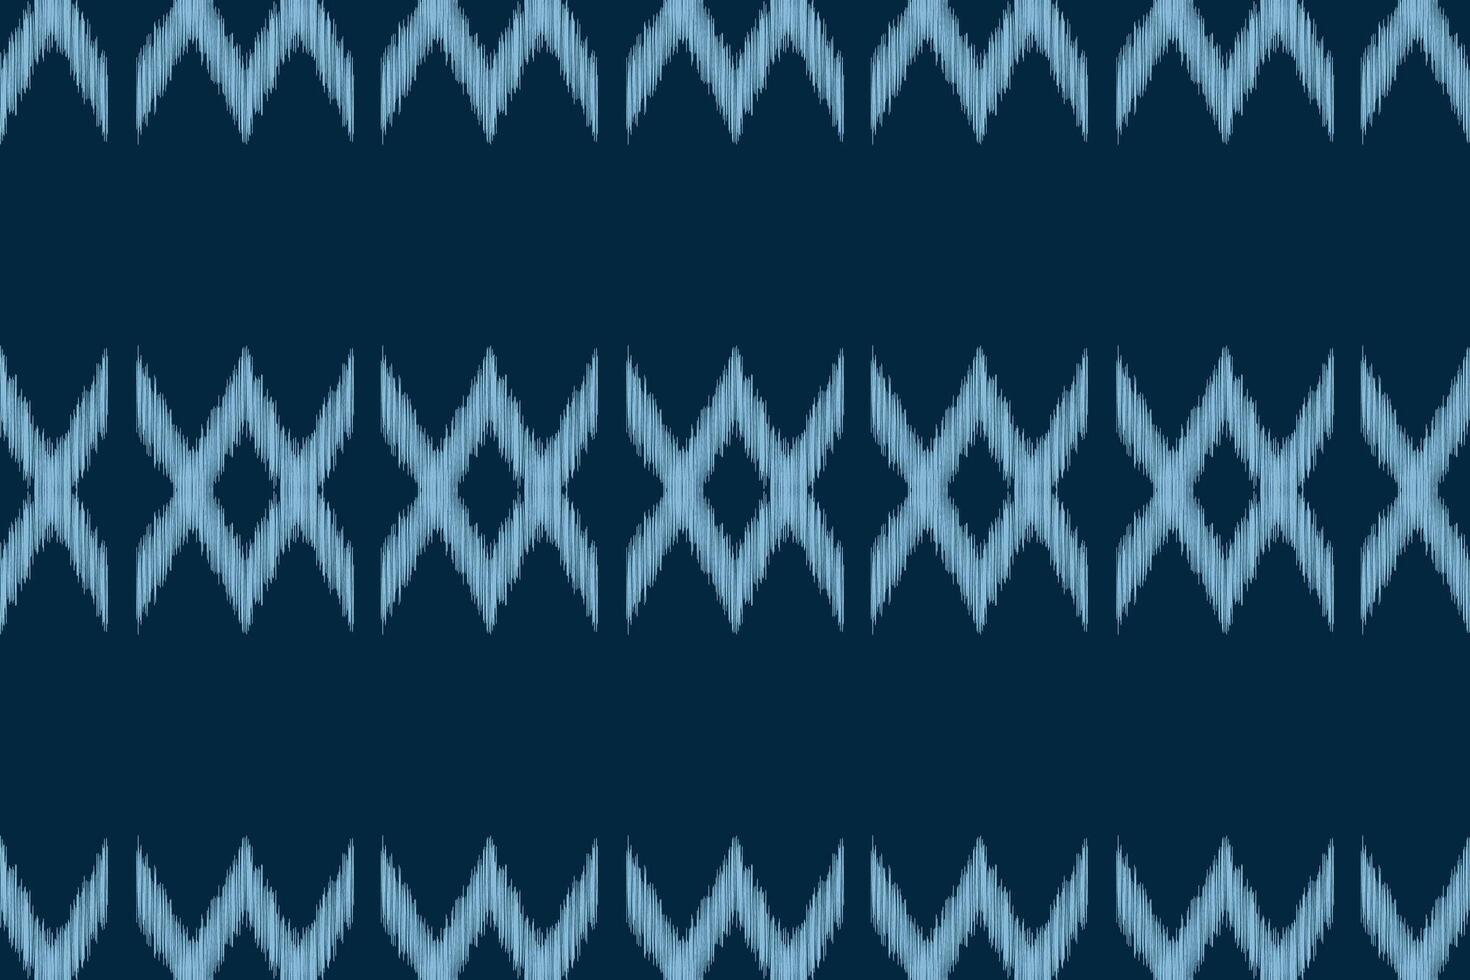 traditionell etnisk ikat motiv tyg mönster geometrisk stil.afrikansk ikat broderi etnisk orientalisk mönster blå bakgrund tapet. abstrakt, vektor, illustration.texture, ram, dekoration. vektor